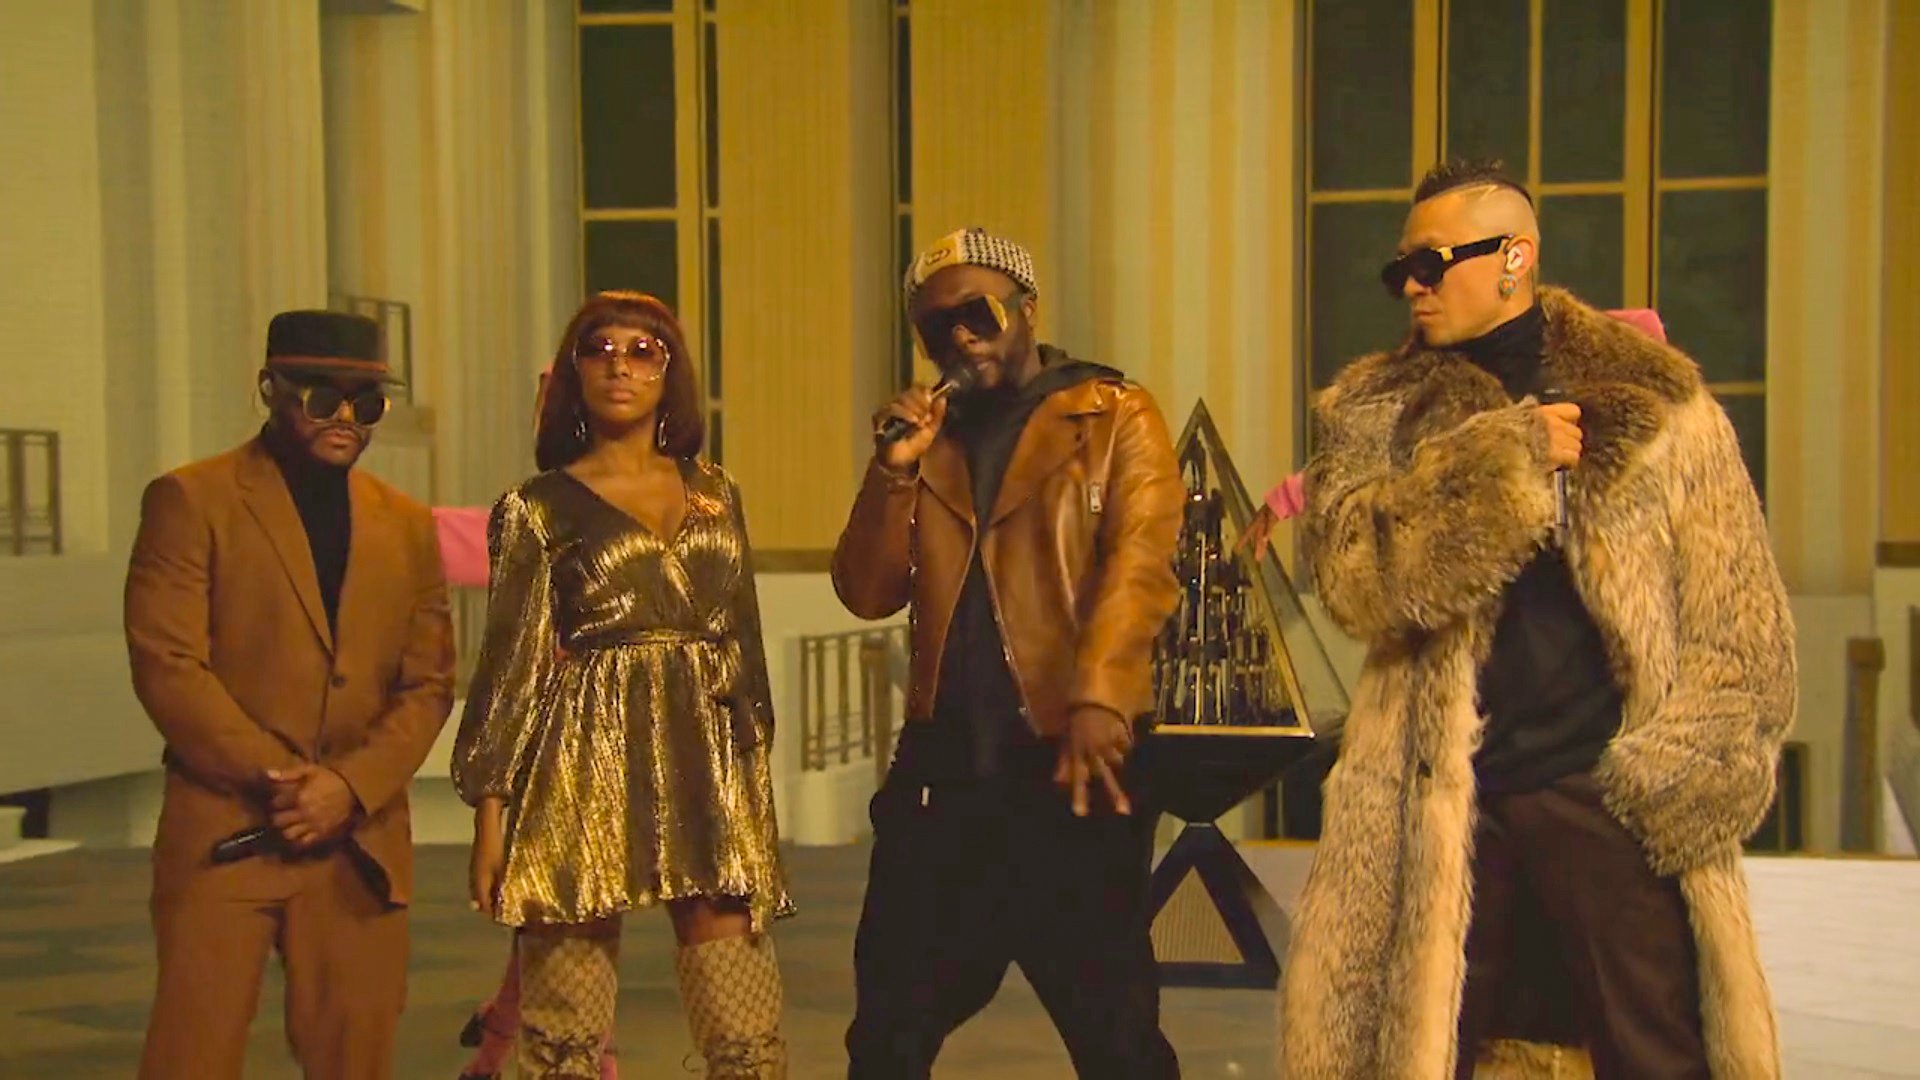 The Black Eyed Peas performing